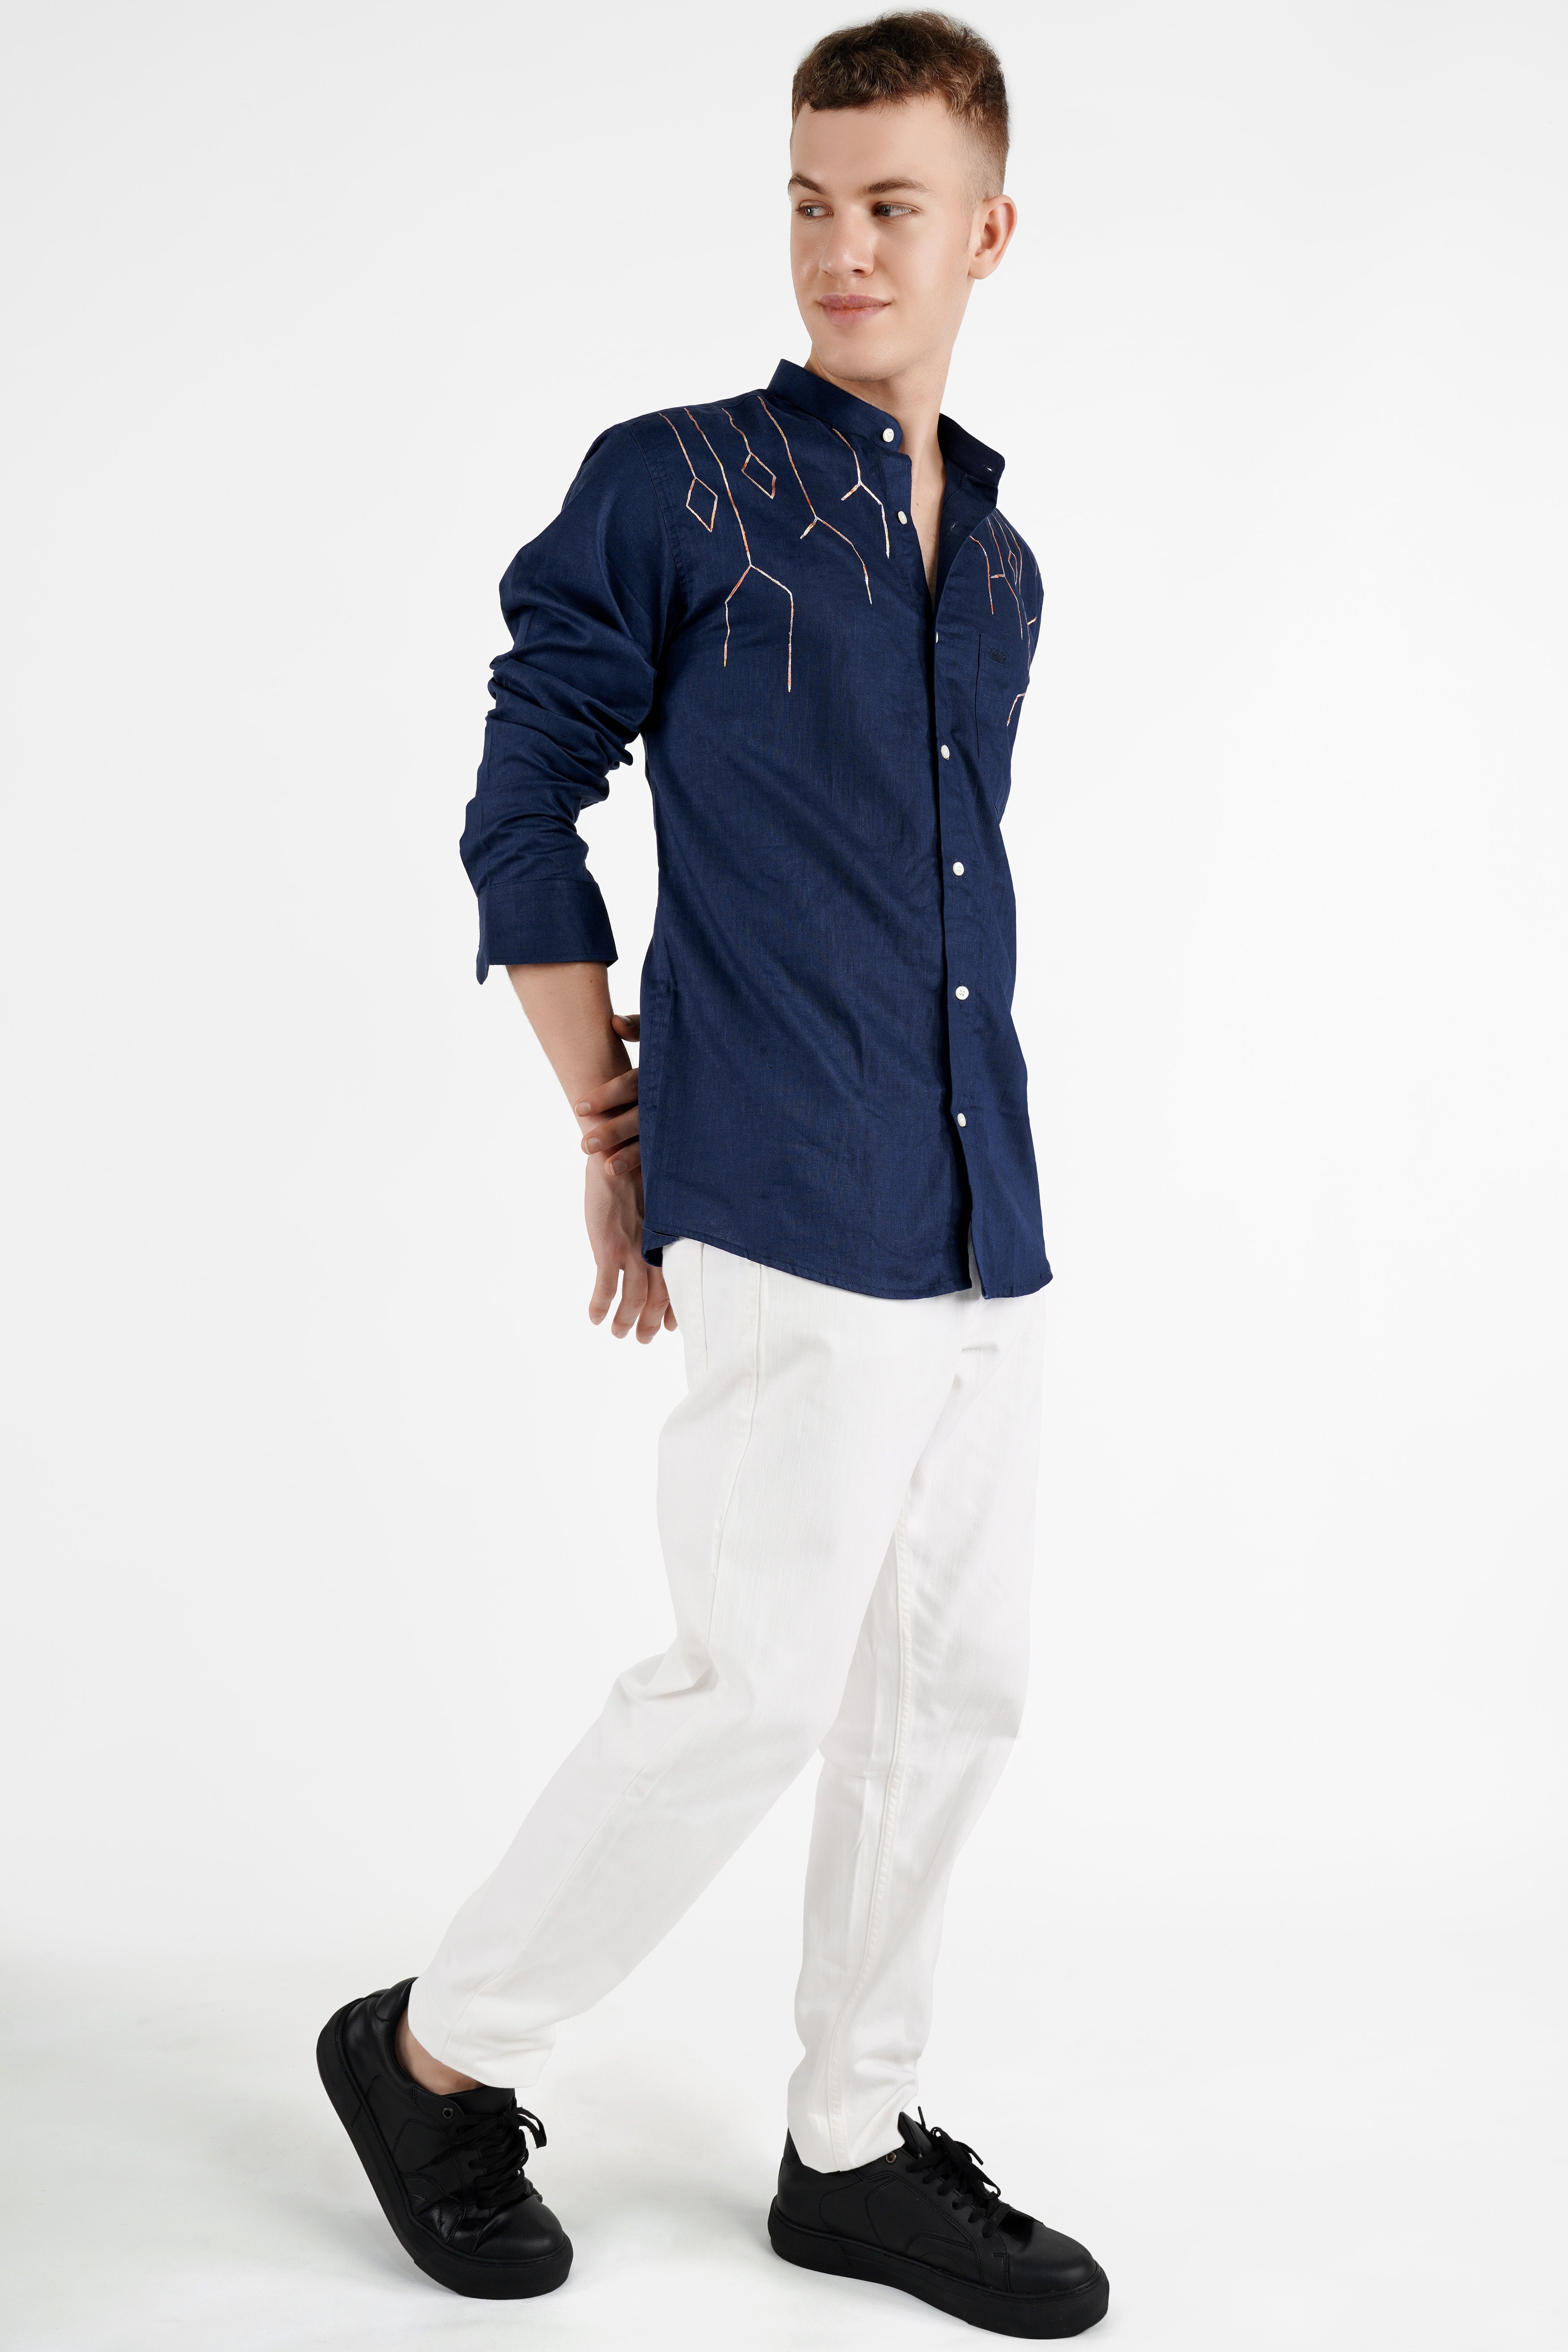 Bunting Blue Hand Painted Luxurious Linen Designer Shirt